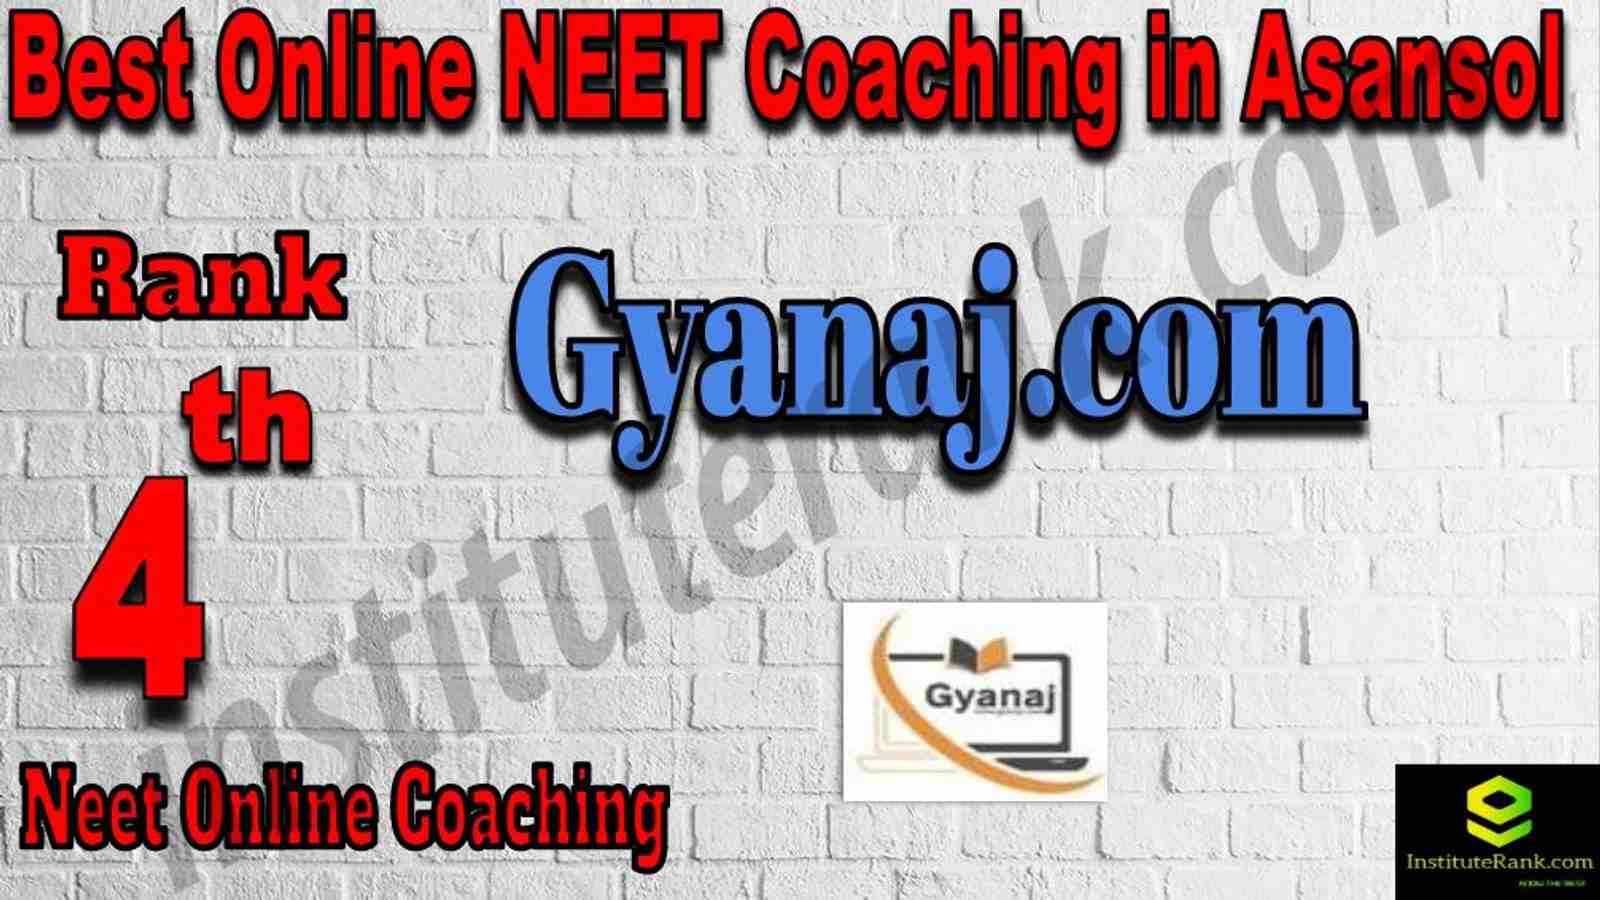 4th Best Online Neet Coaching in Asansol